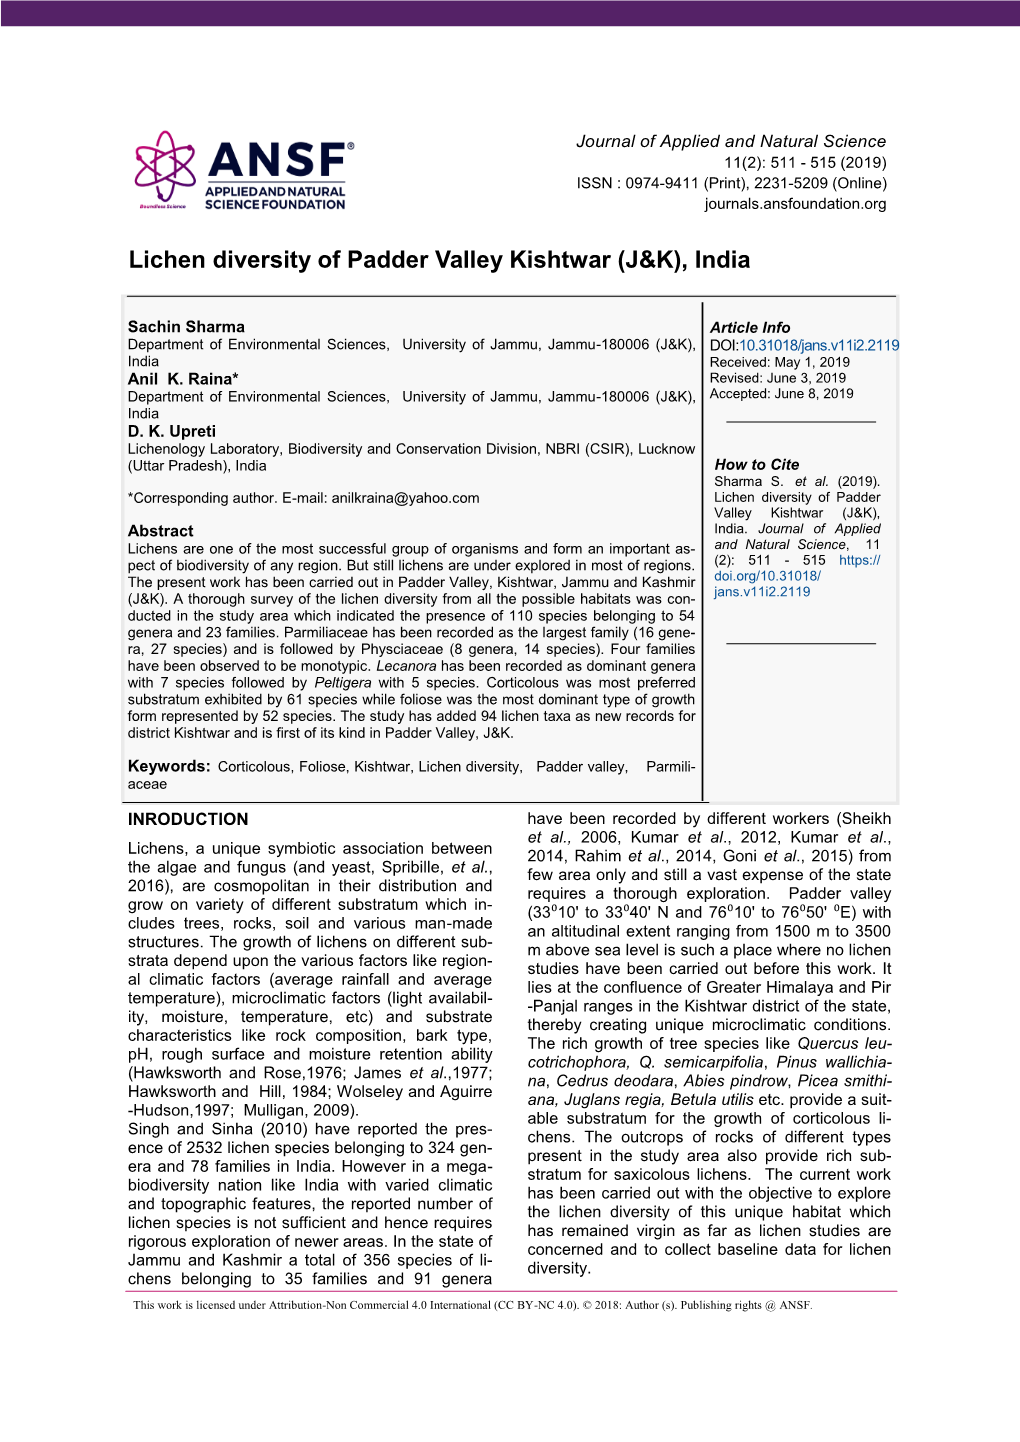 Lichen Diversity of Padder Valley Kishtwar (J&K), India